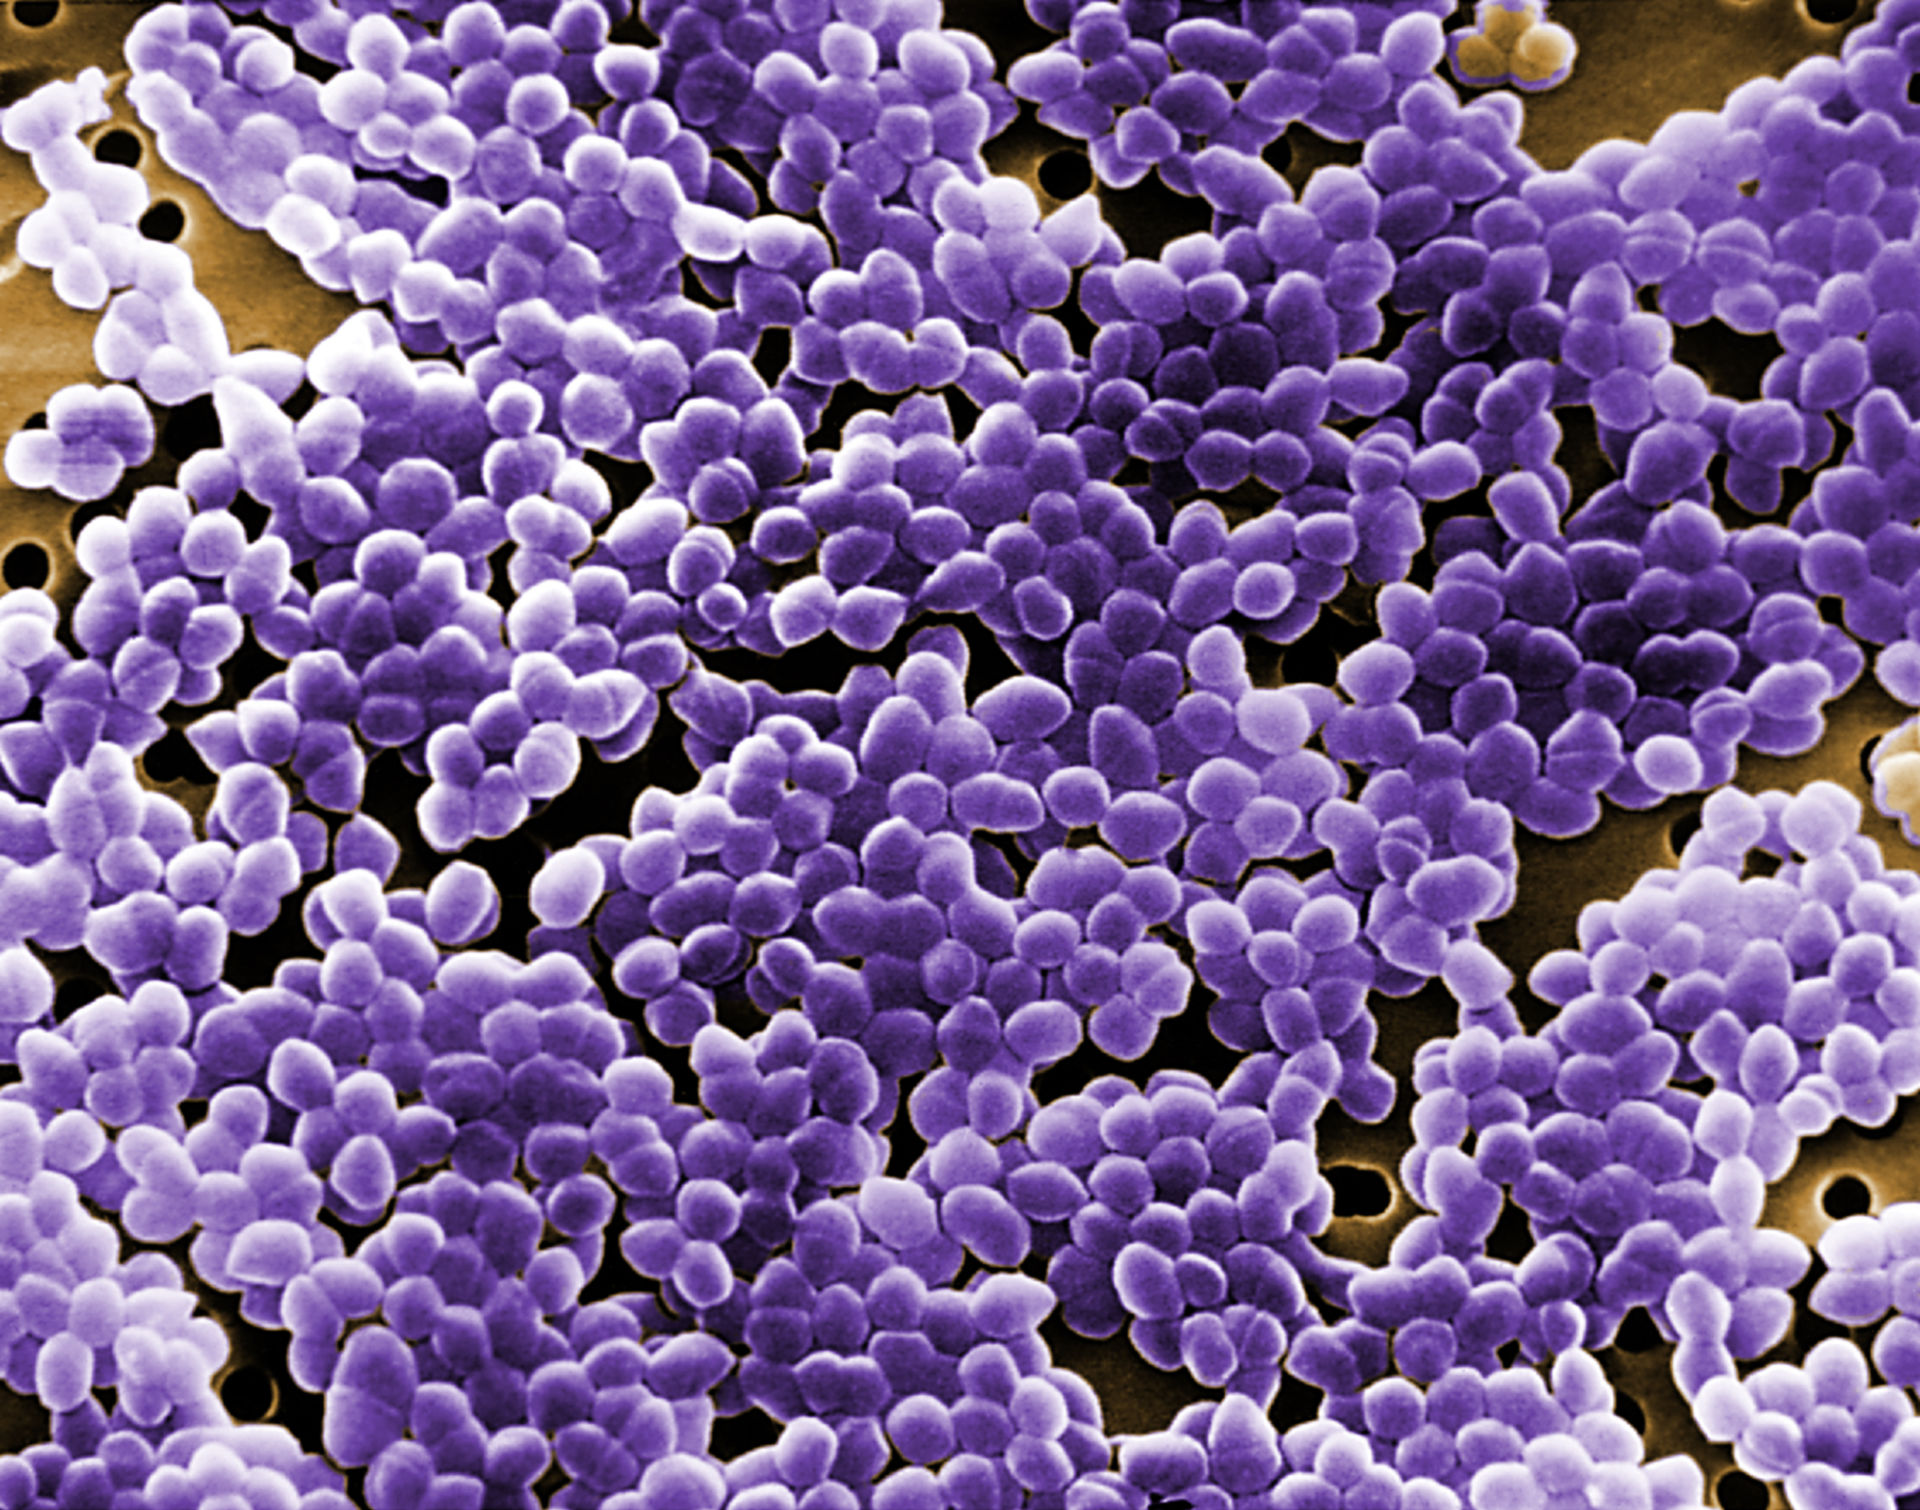 Enterococcus sp. bacteria (REM)